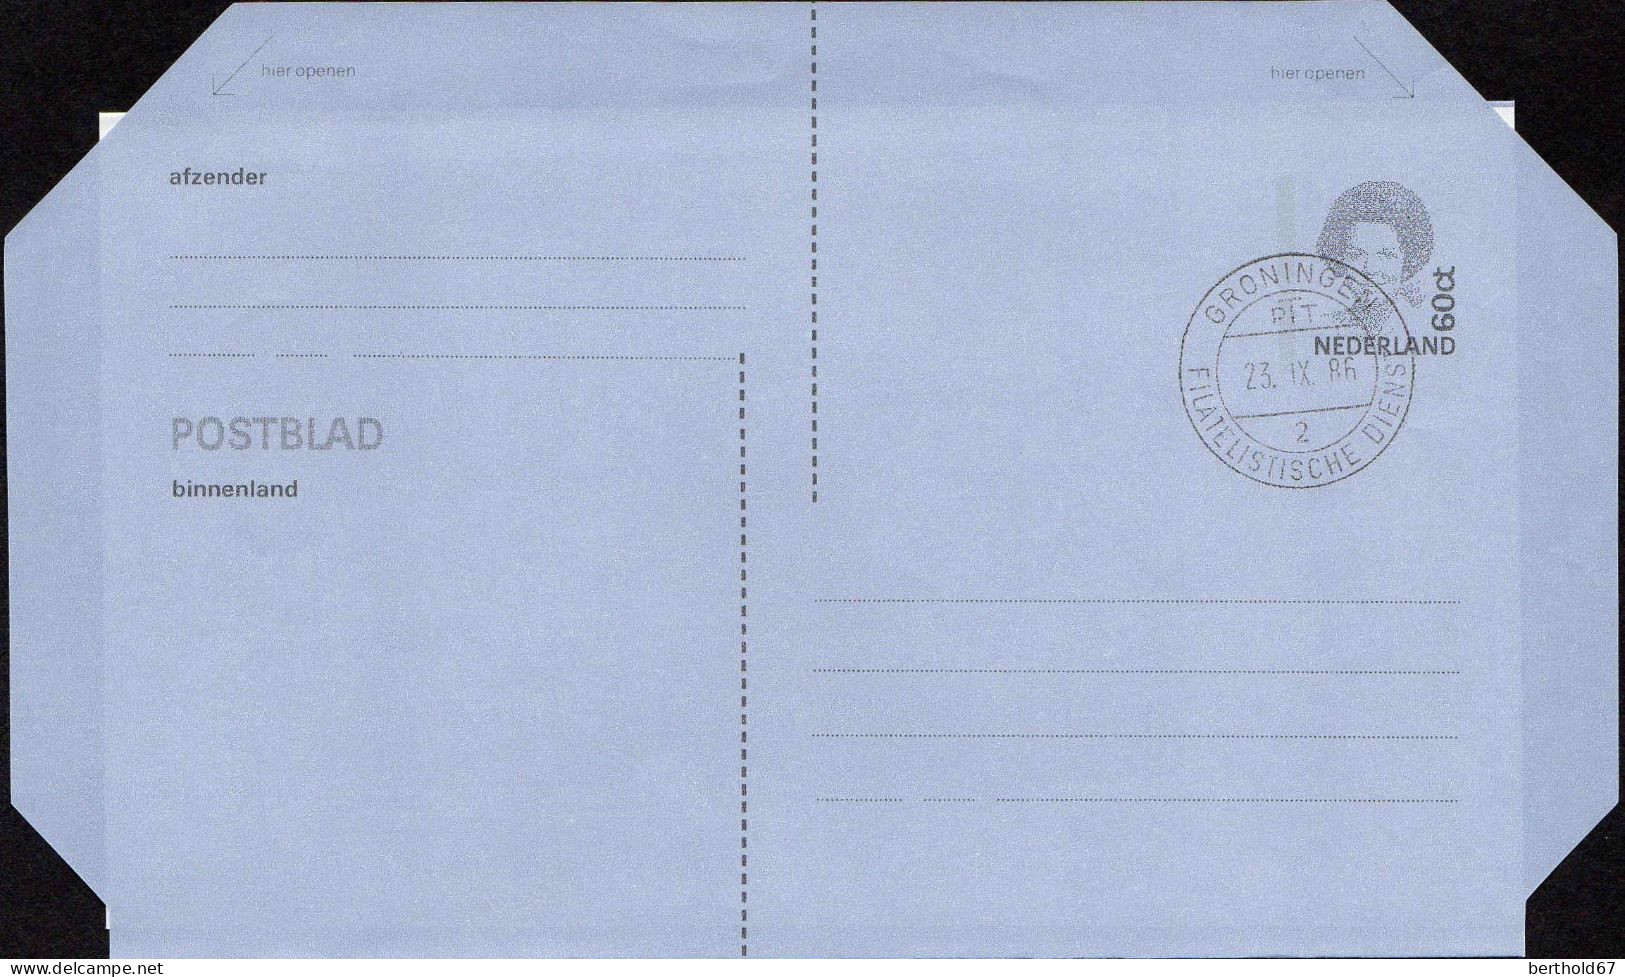 Pays-Bas Aérogr Obl (57) Postblad Binnenland 55ct Reine Beatrix (TB Cachet à Date) 60ct Bande Phosphore 28x2mm - Postwaardestukken